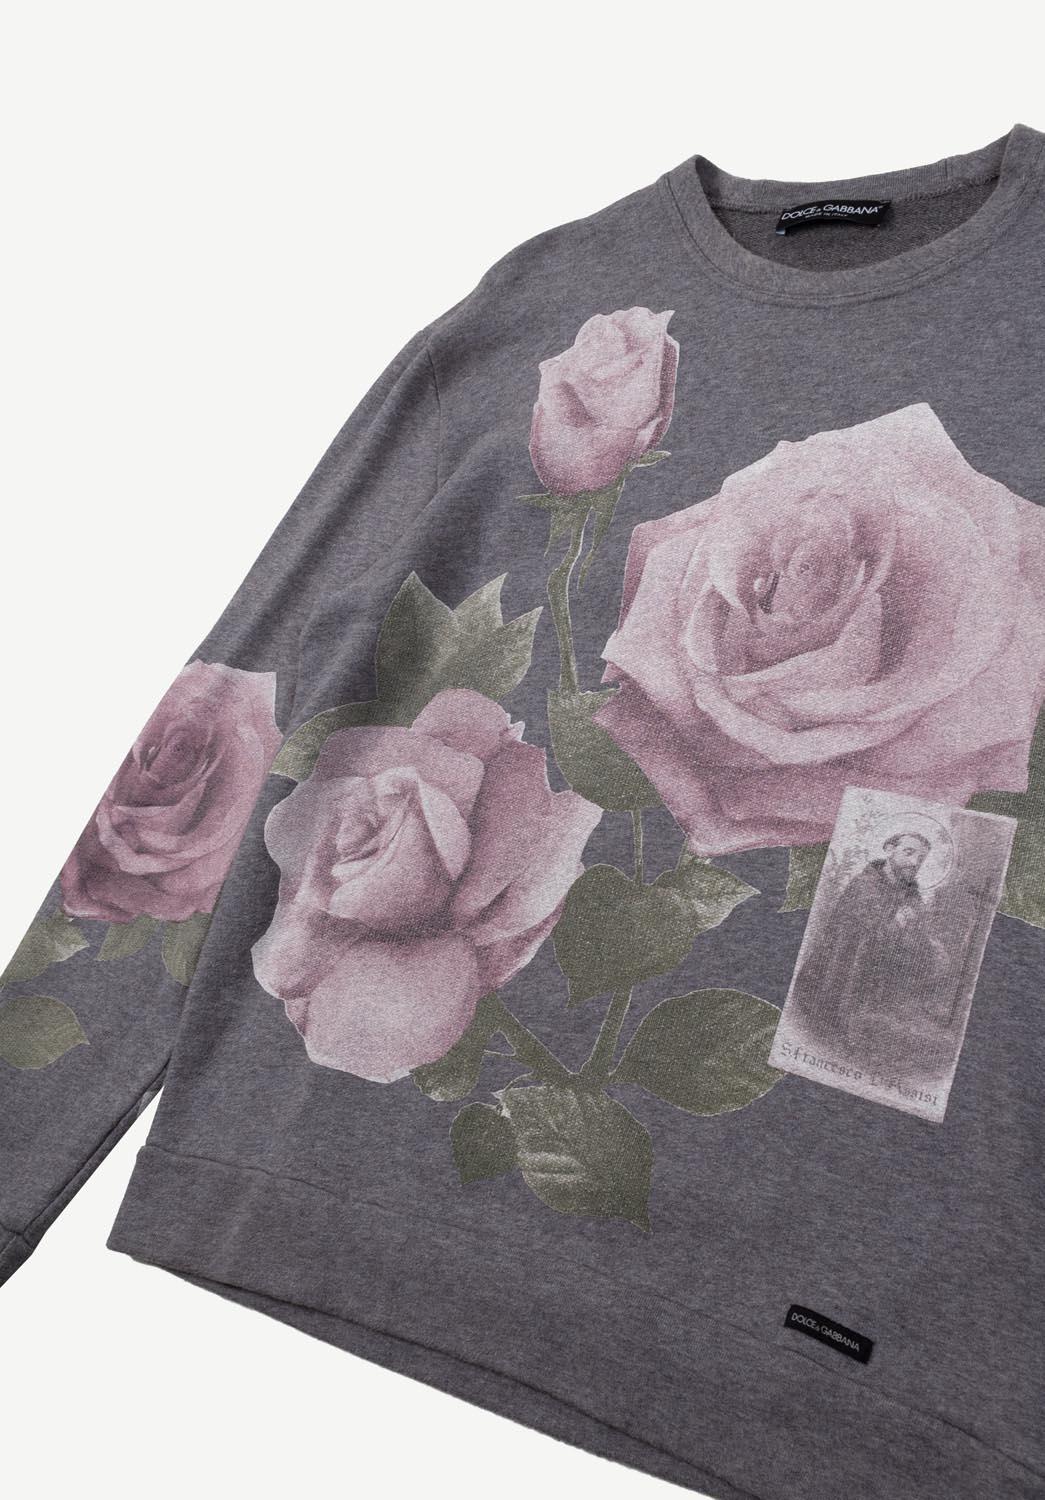 Gray Dolce&Gabbana Men Sweatshirt Jumper Top Size M/L, S400 For Sale